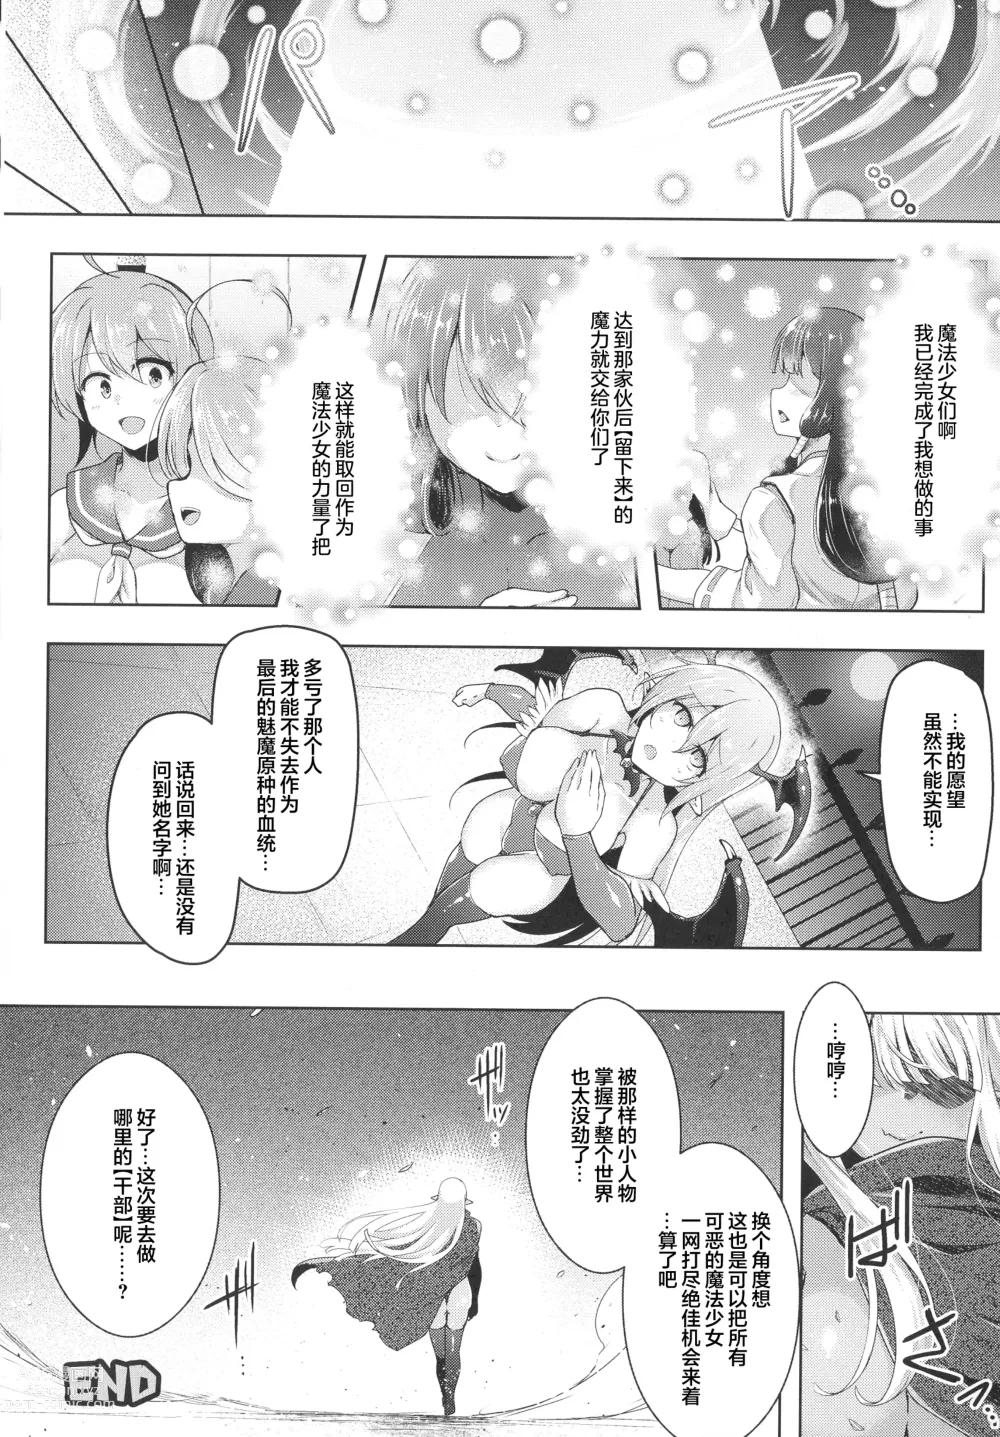 Page 69 of manga Futanari Mahou Shoujo Royale